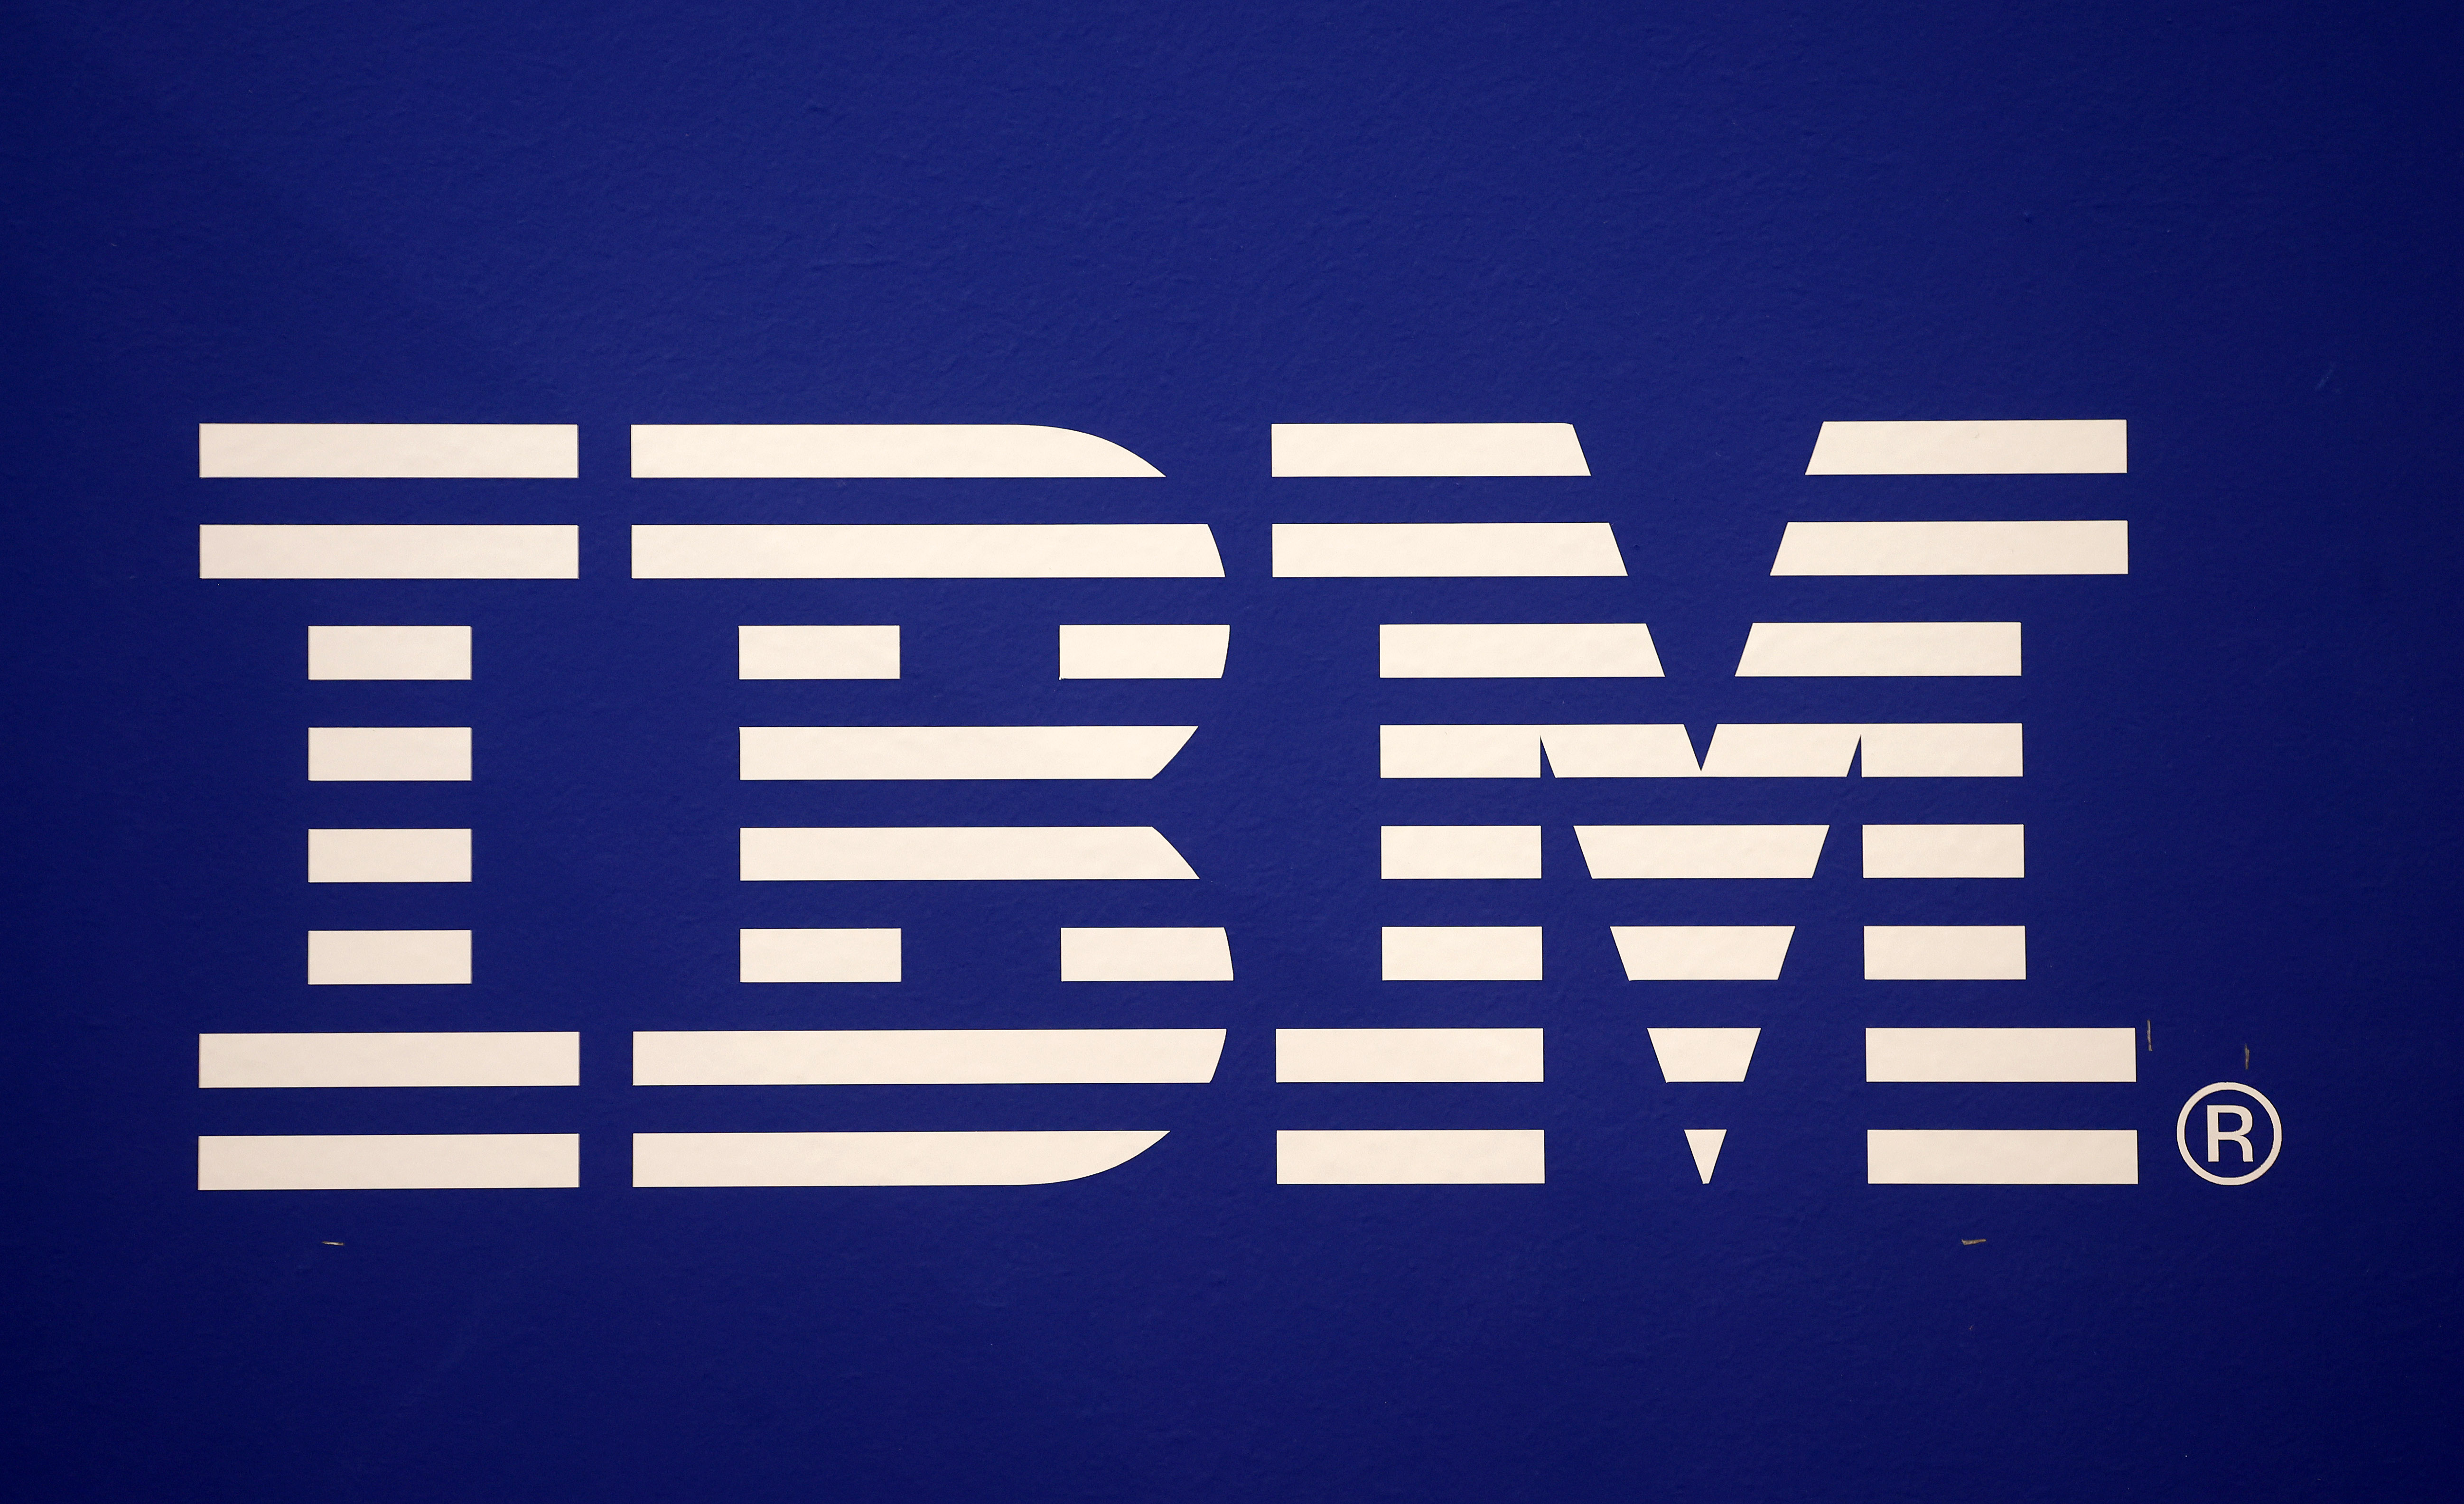 IBM logo displayed during the Viva Technology conference at Parc des Expositions Porte de Versailles on June 15, 2023 in Paris